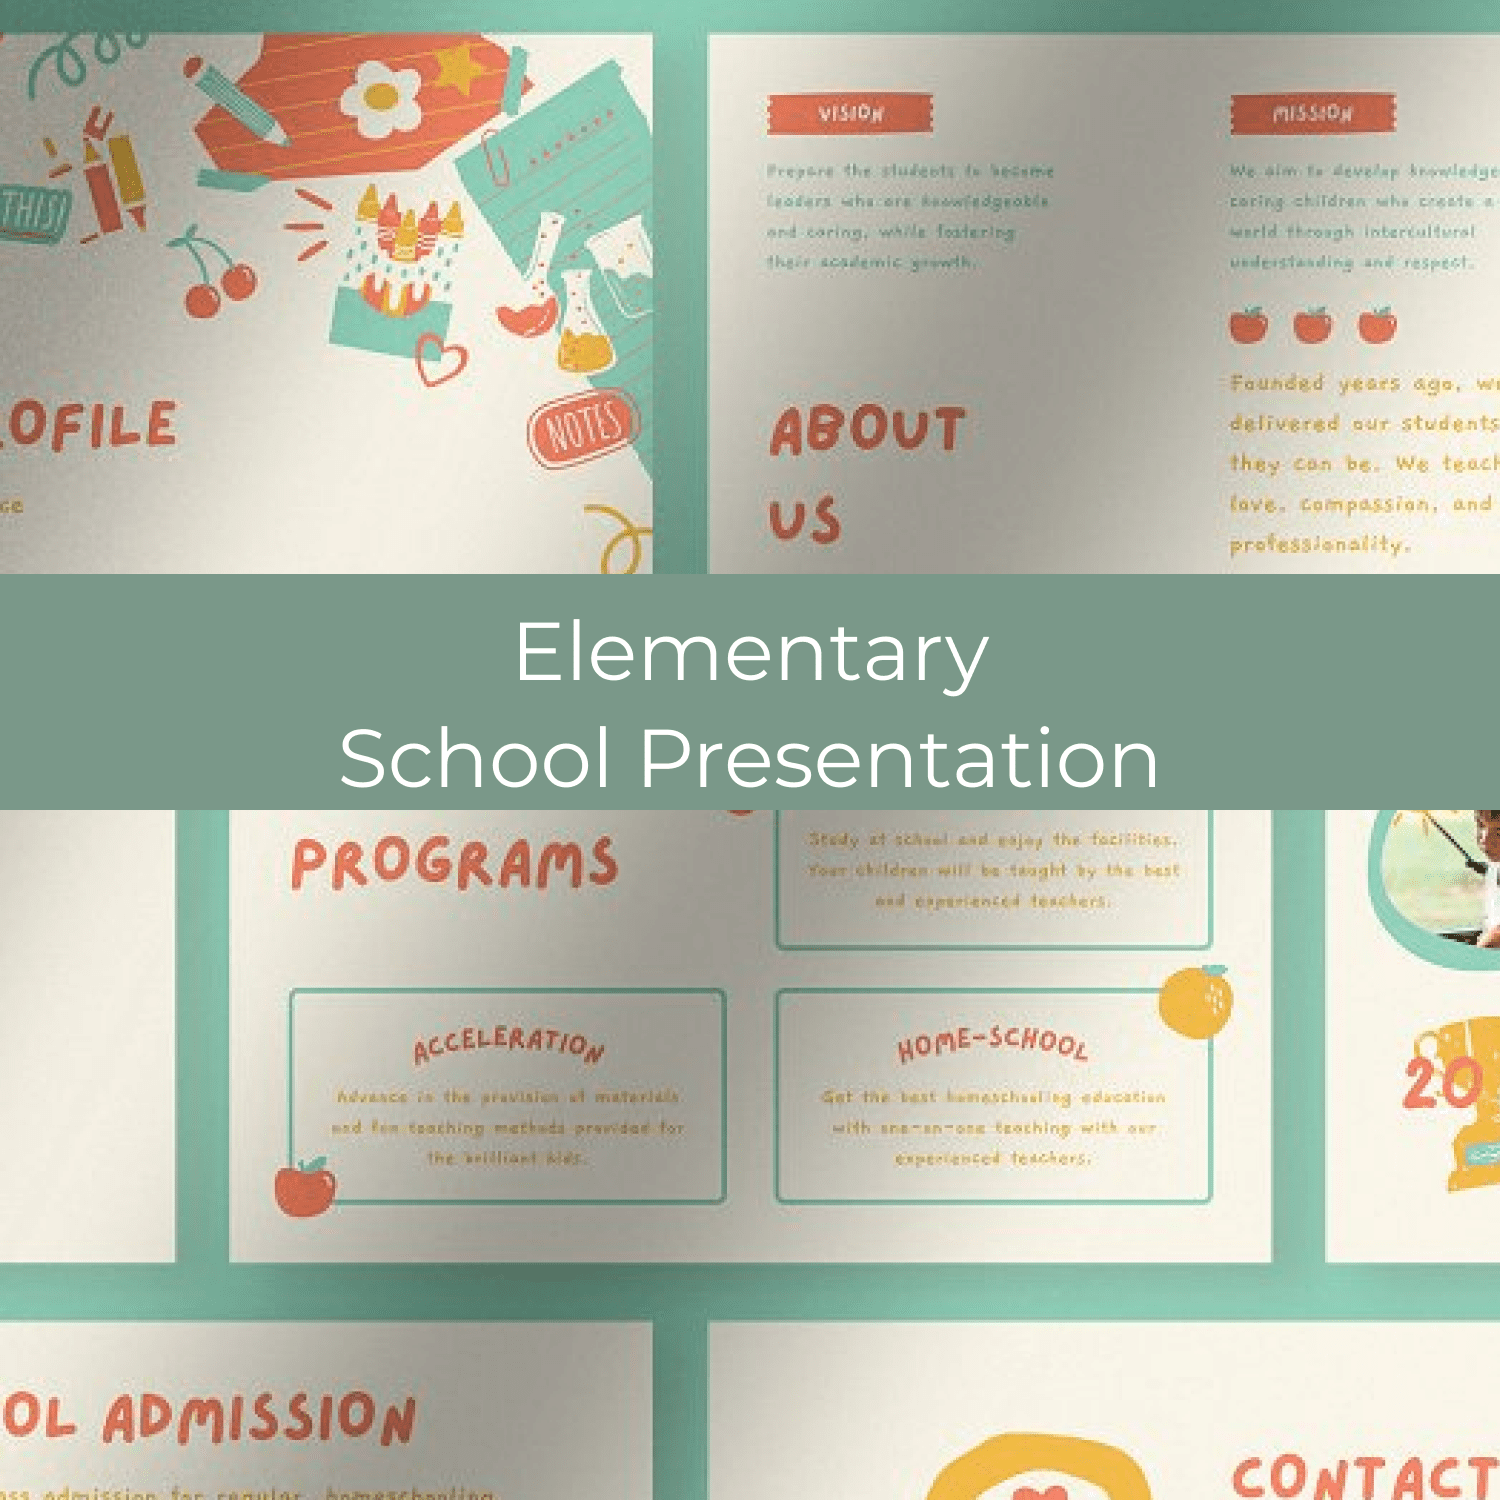 Elementary School Presentation cover.